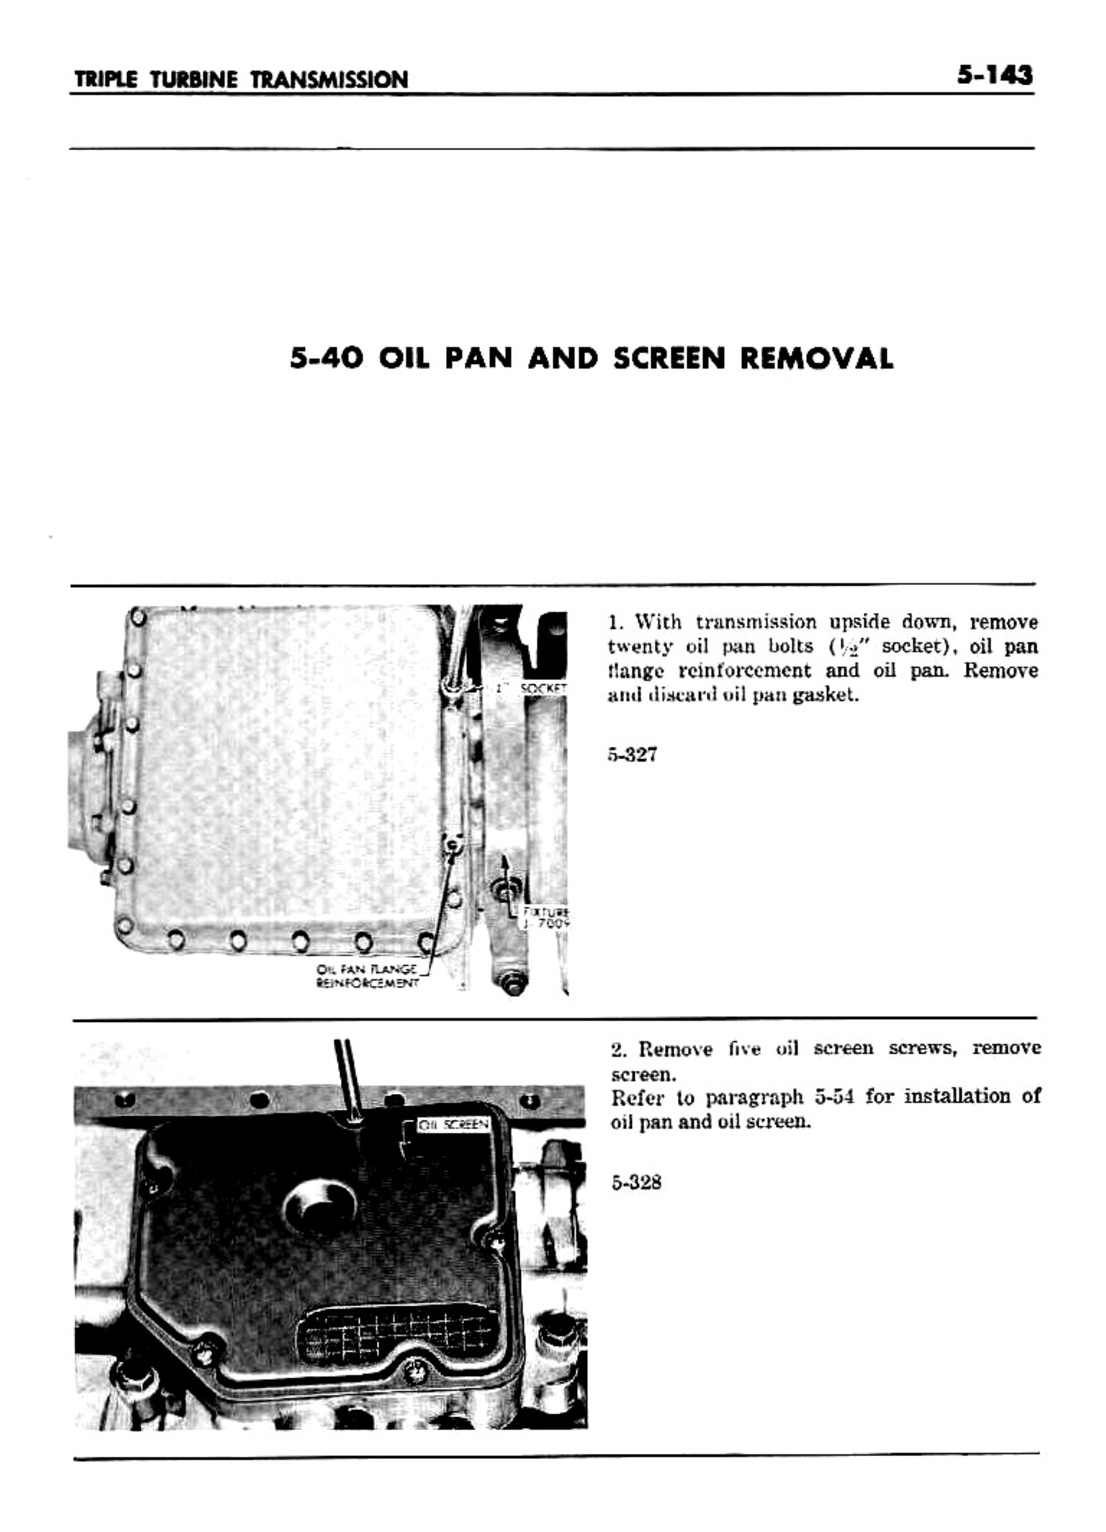 n_06 1959 Buick Shop Manual - Auto Trans-143-143.jpg